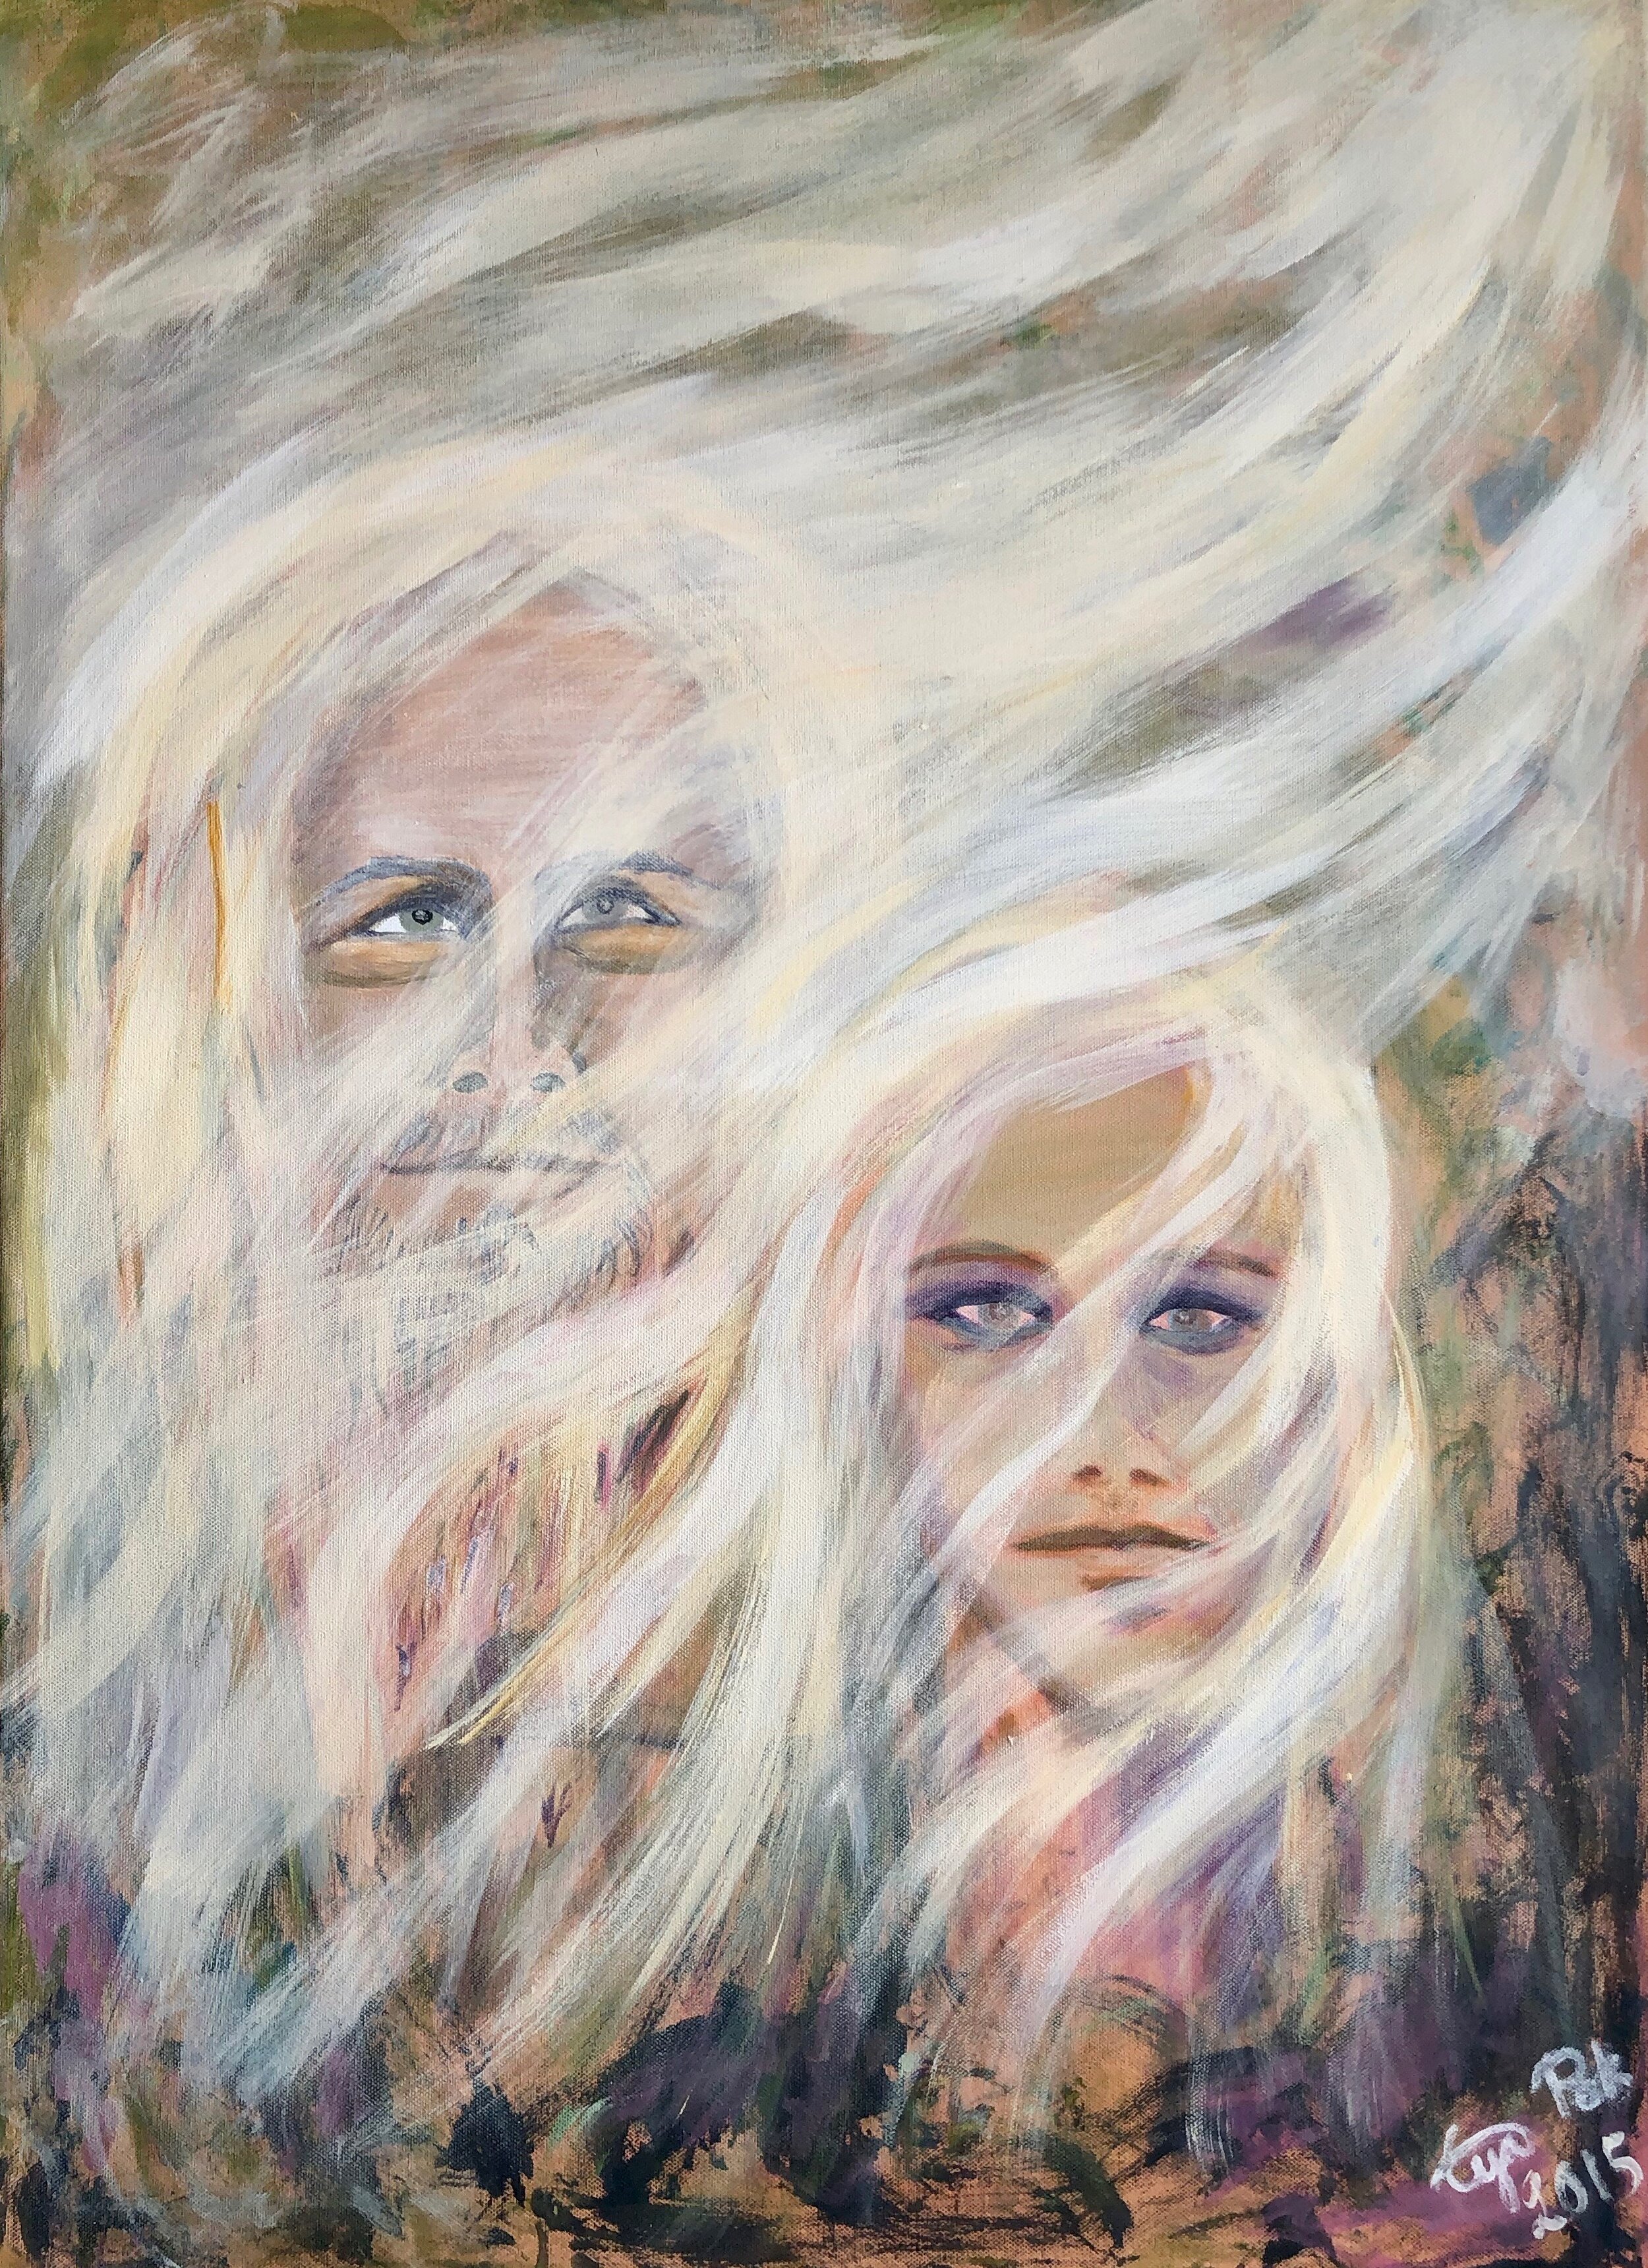  ANIMUS AND ANIMA, 2015, acrylic on canvas, 90x65cm. Sold. 